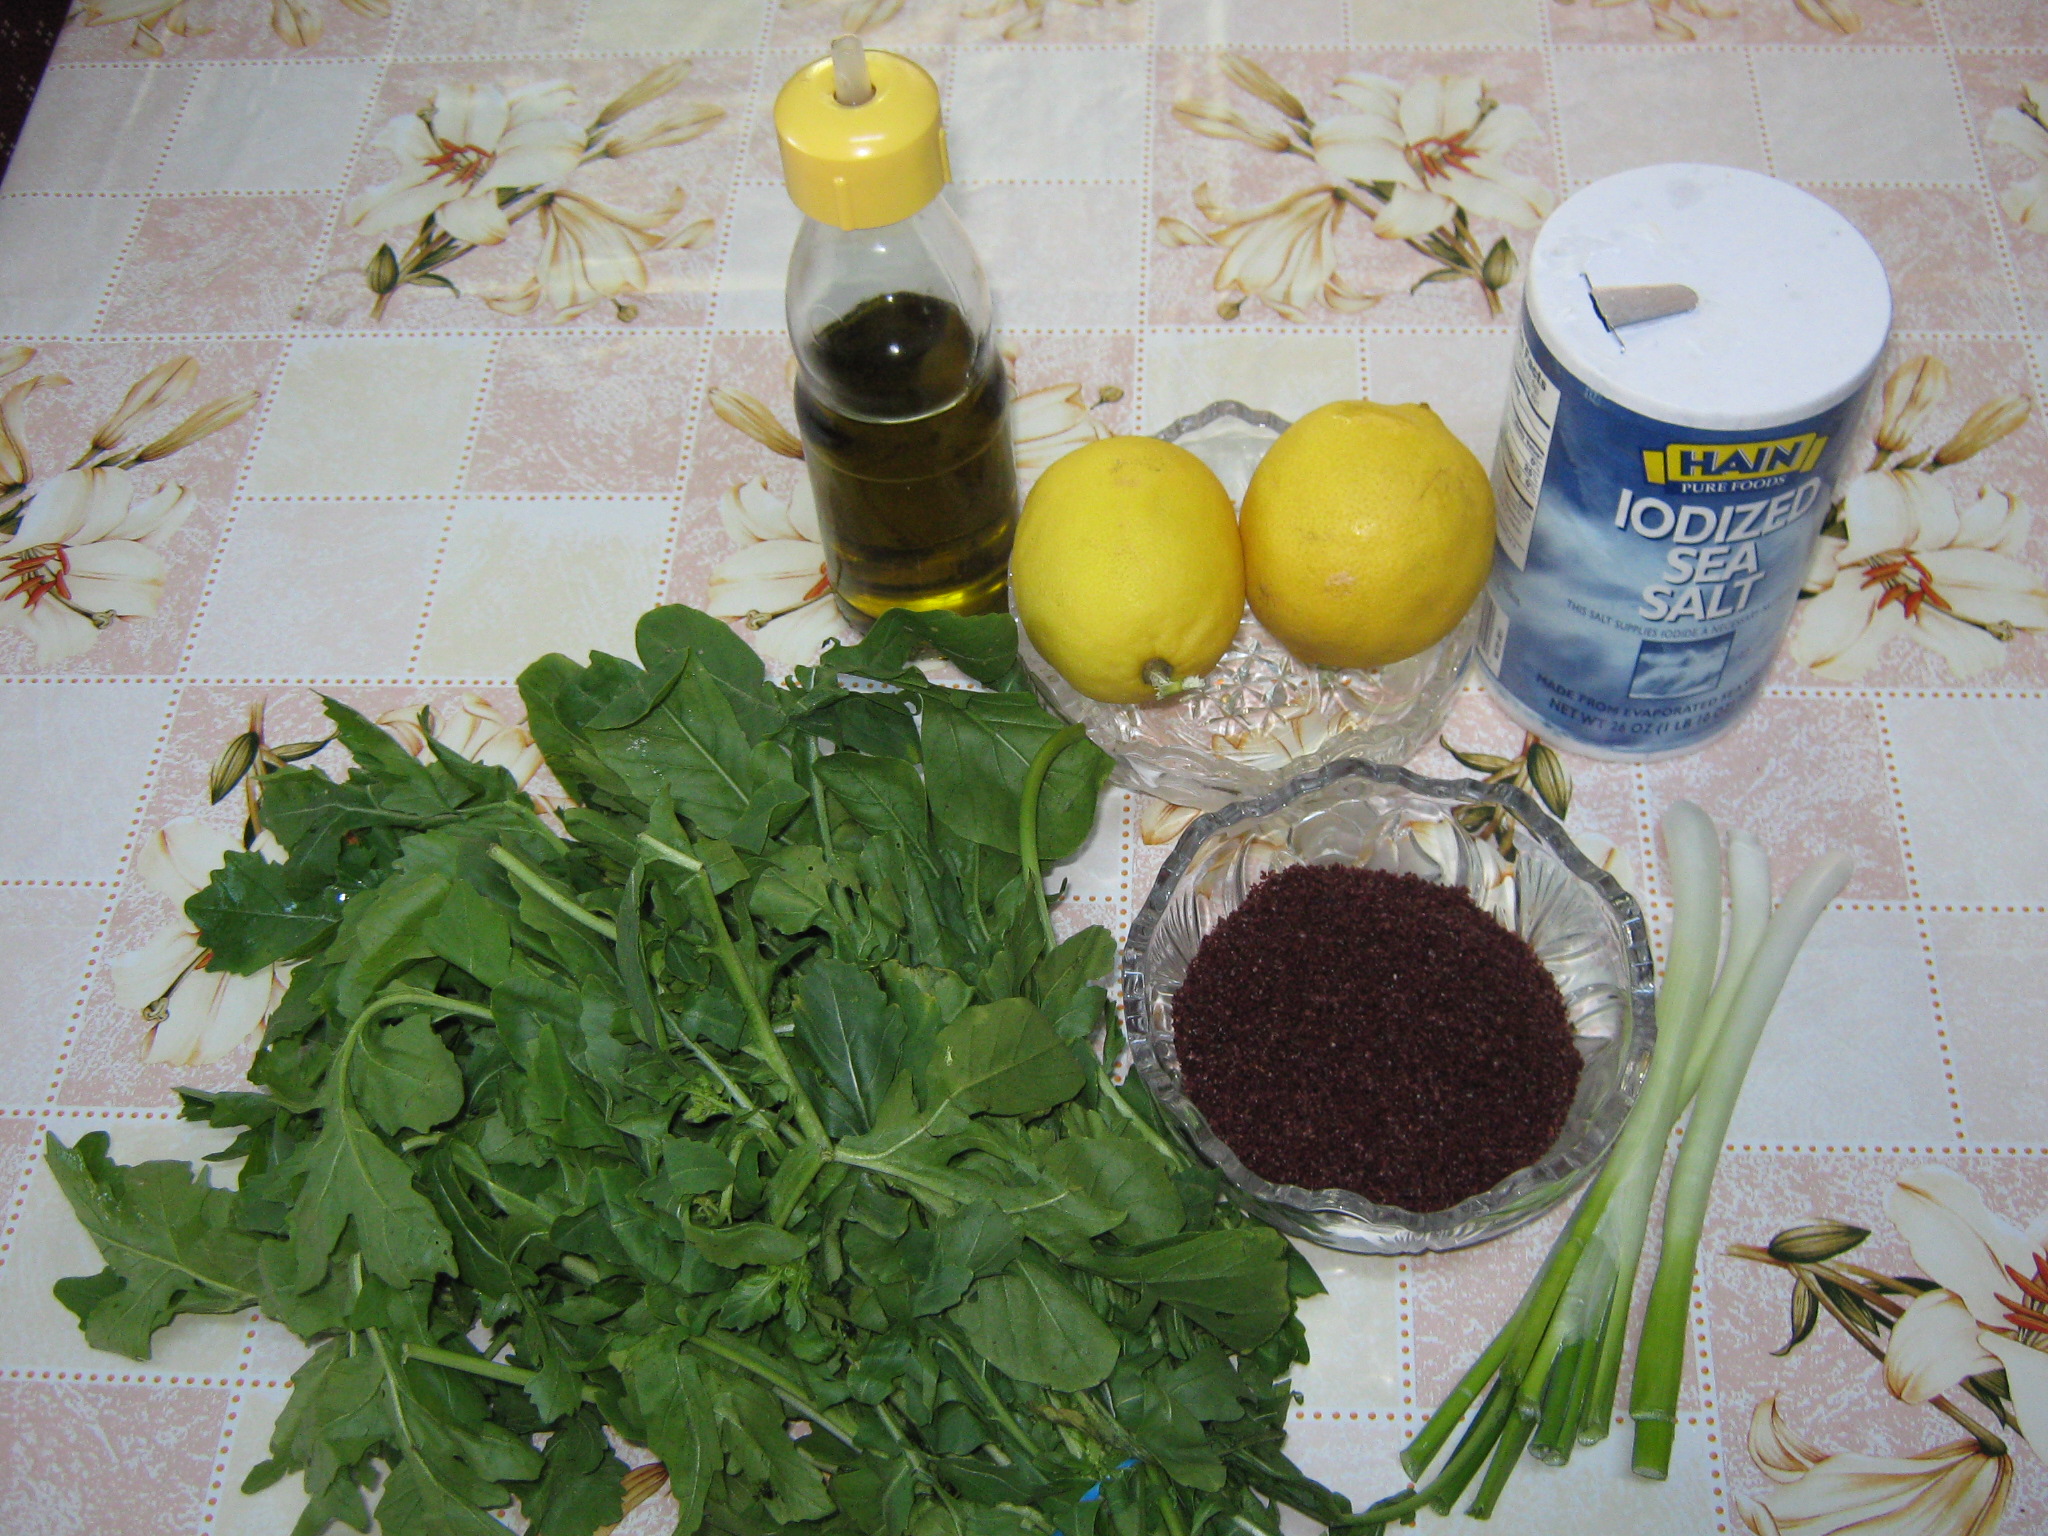 Salata araba de rucola